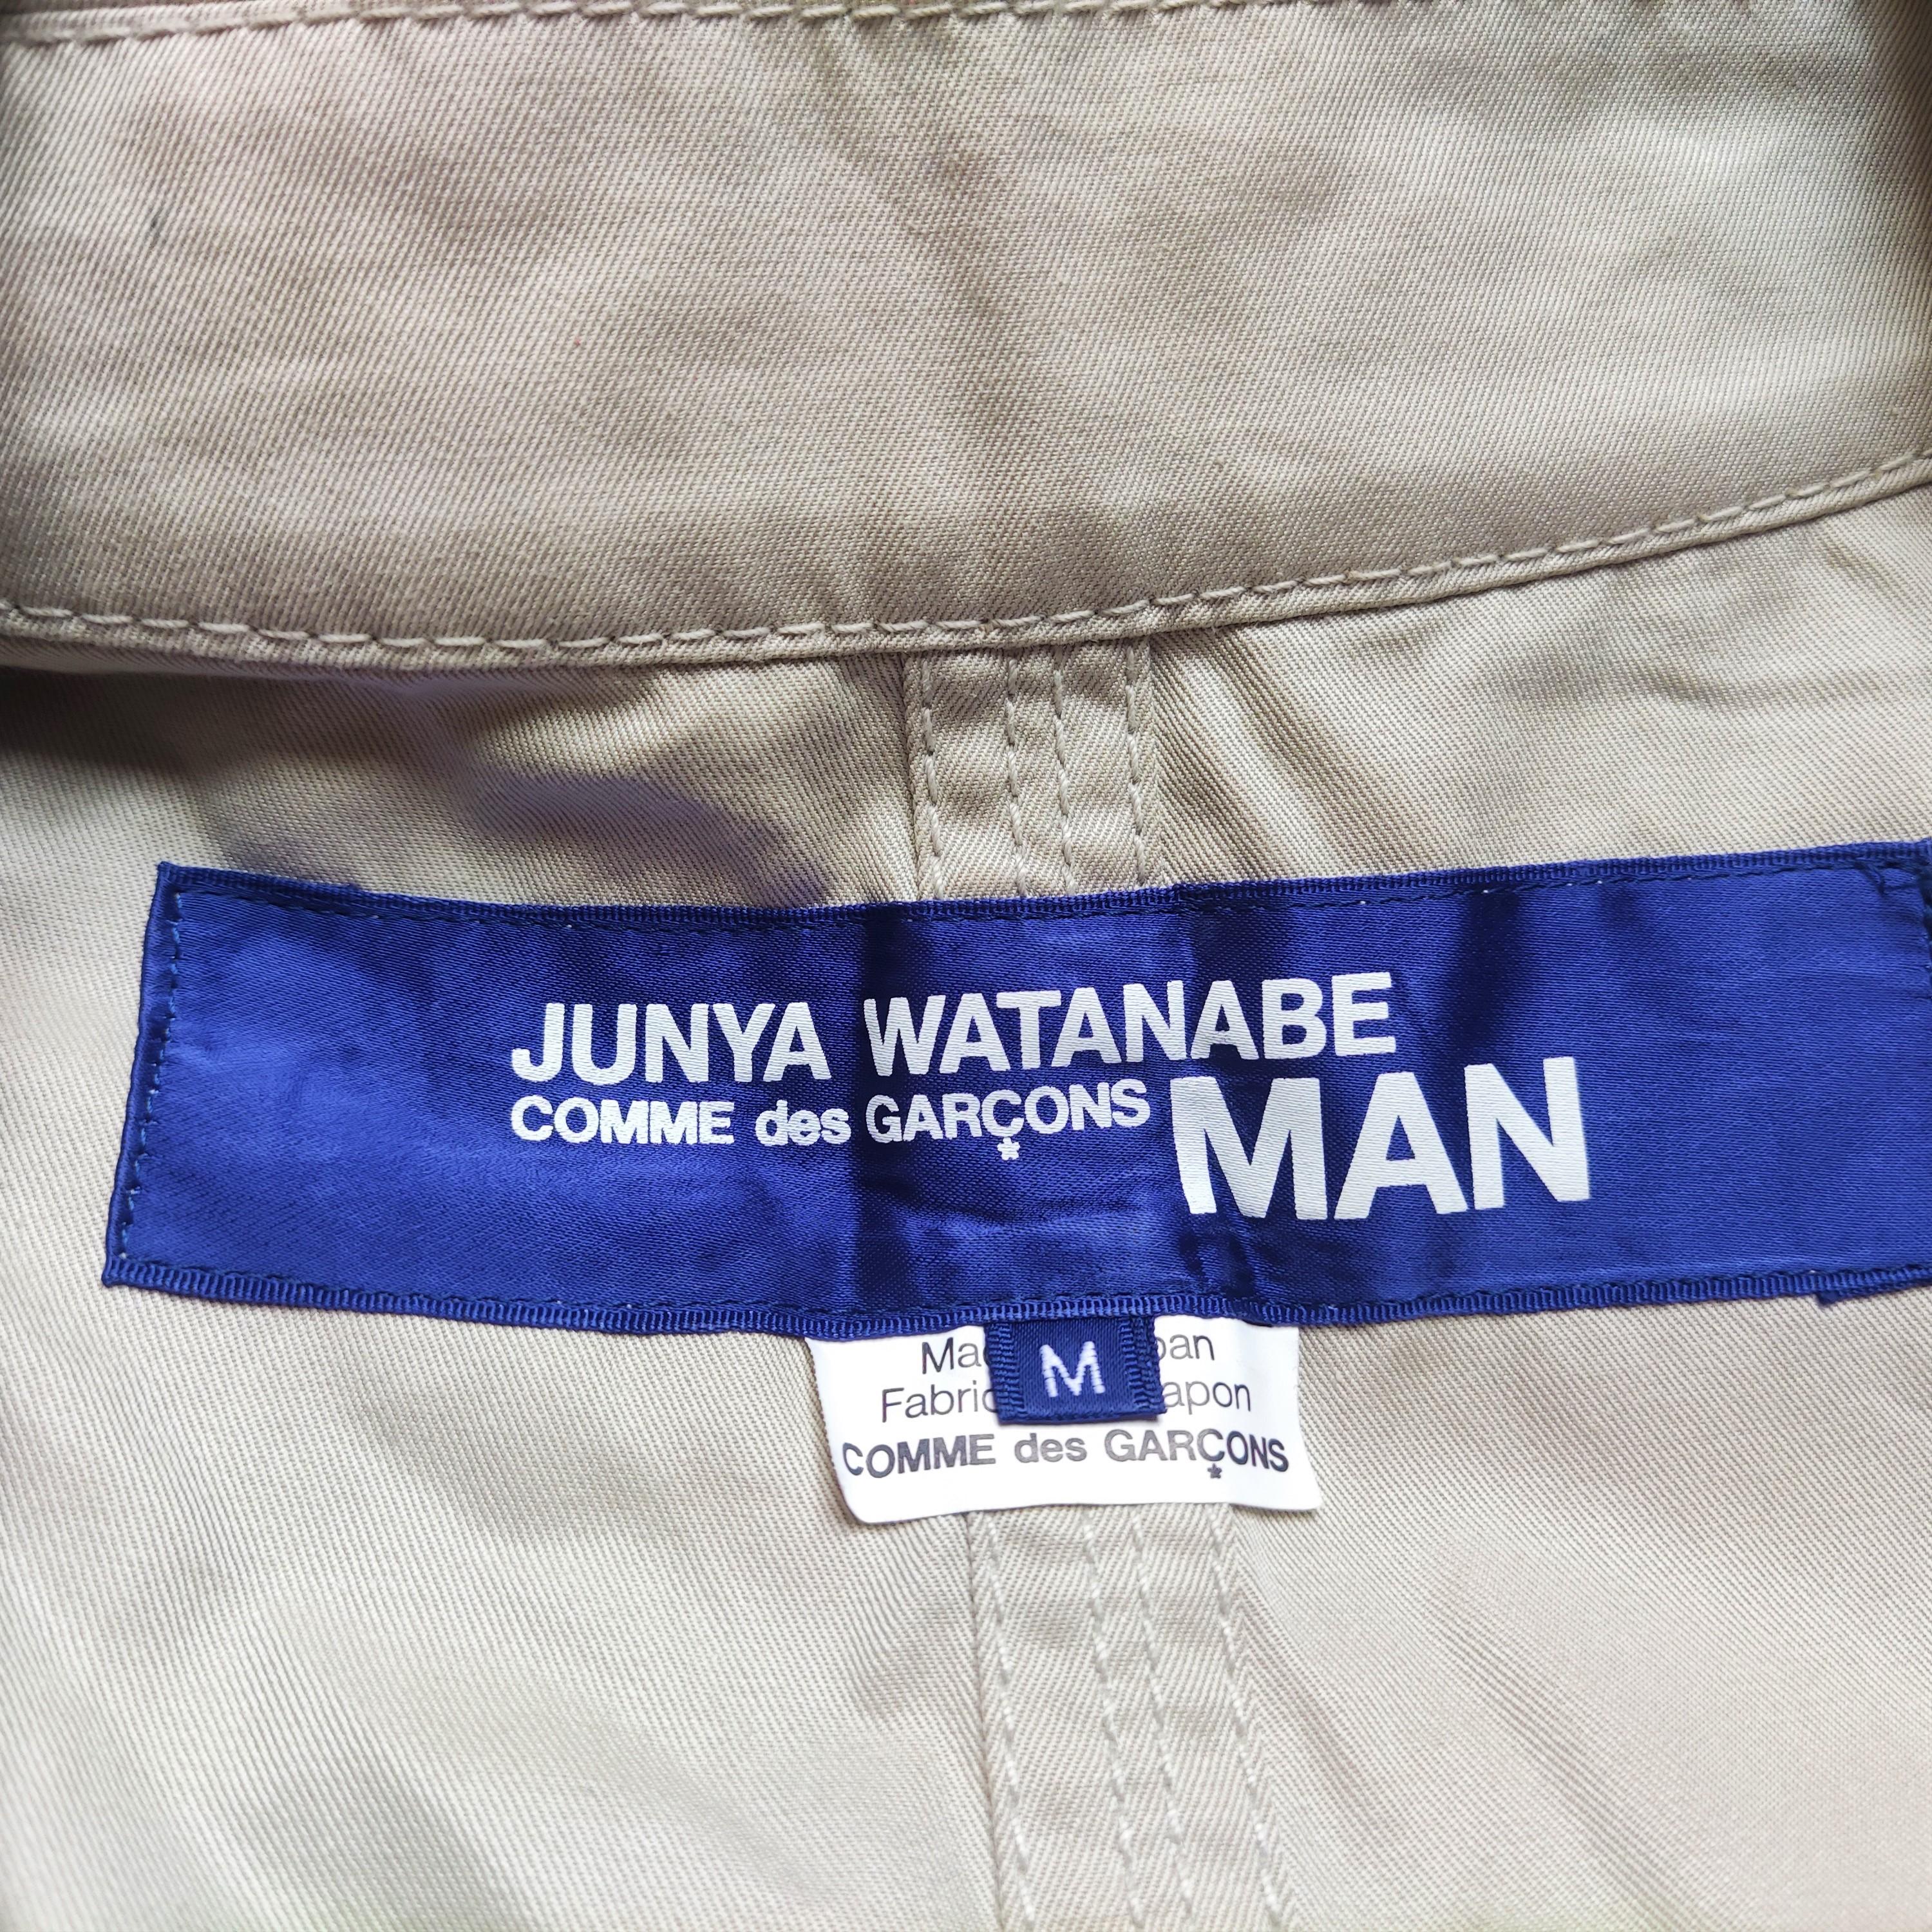 Junya Watanabe Comme des Garcons Man Working Hardwork Jacket Trench Coat For Sale 4